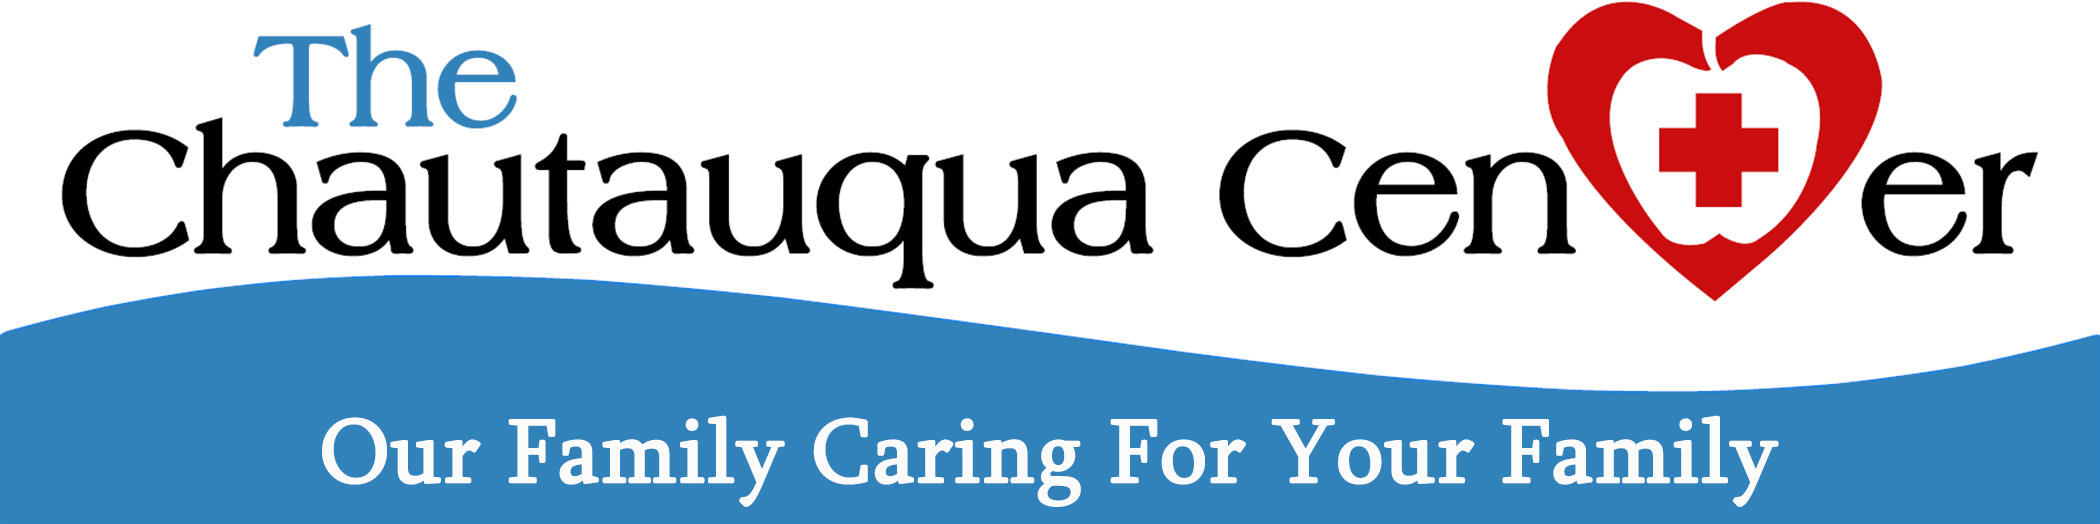 The Chautauqua Center - Jamestown Primary Care, Behavioral Health and Dental